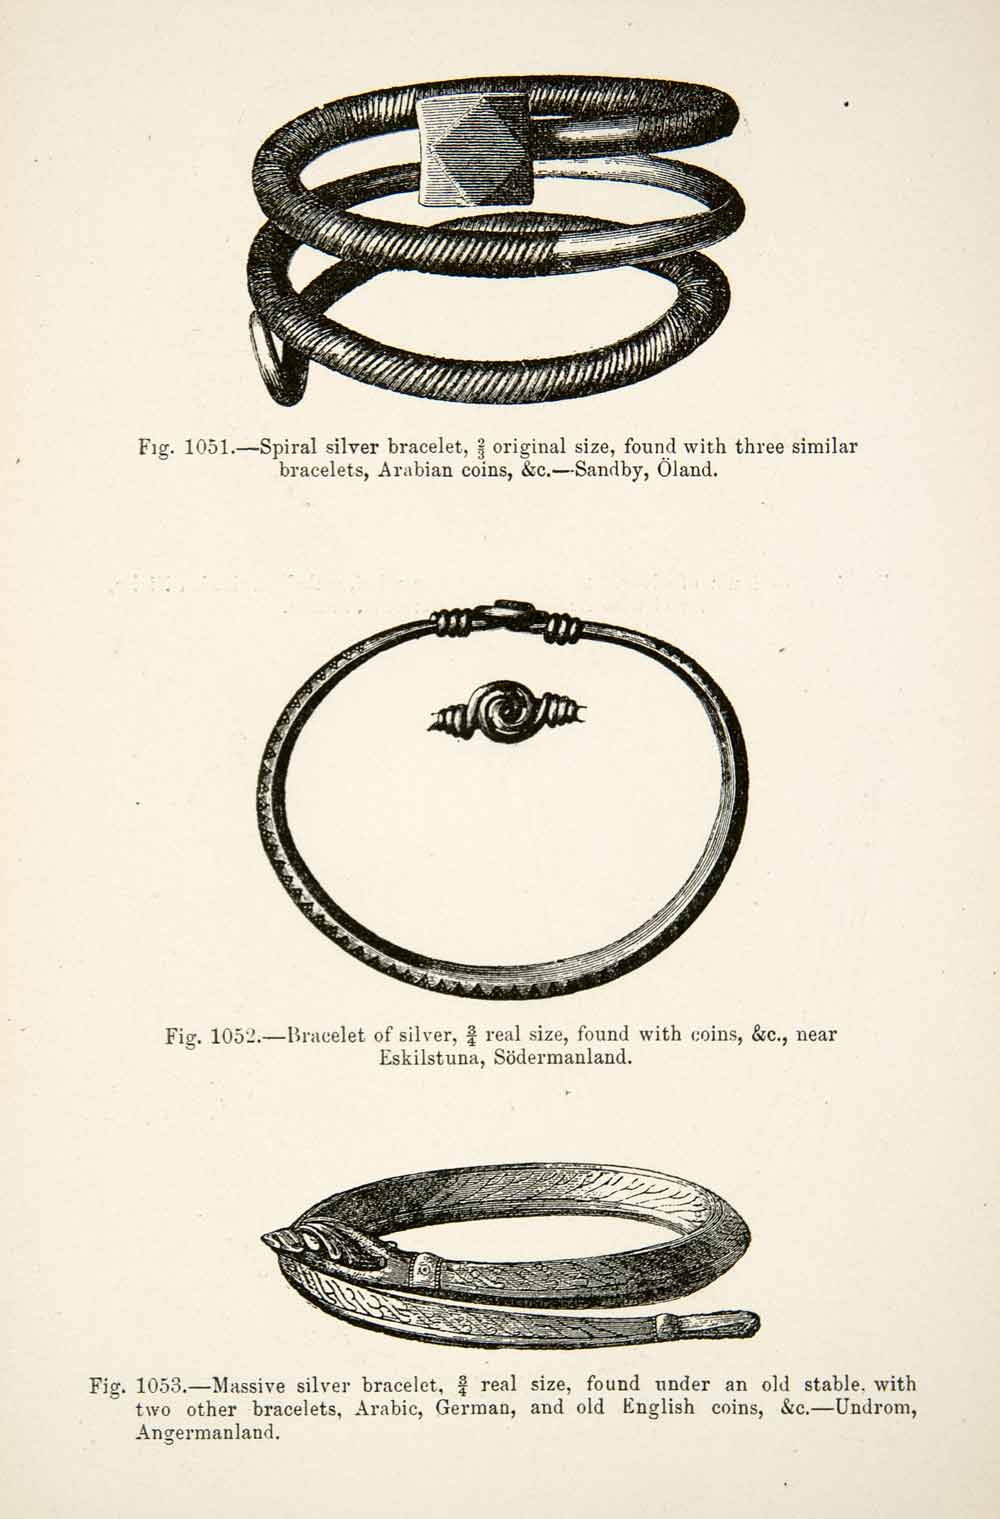 1889 Wood Engraving Bracelet Spiral Silver Sandby Oland Eskilstuna XGYA7